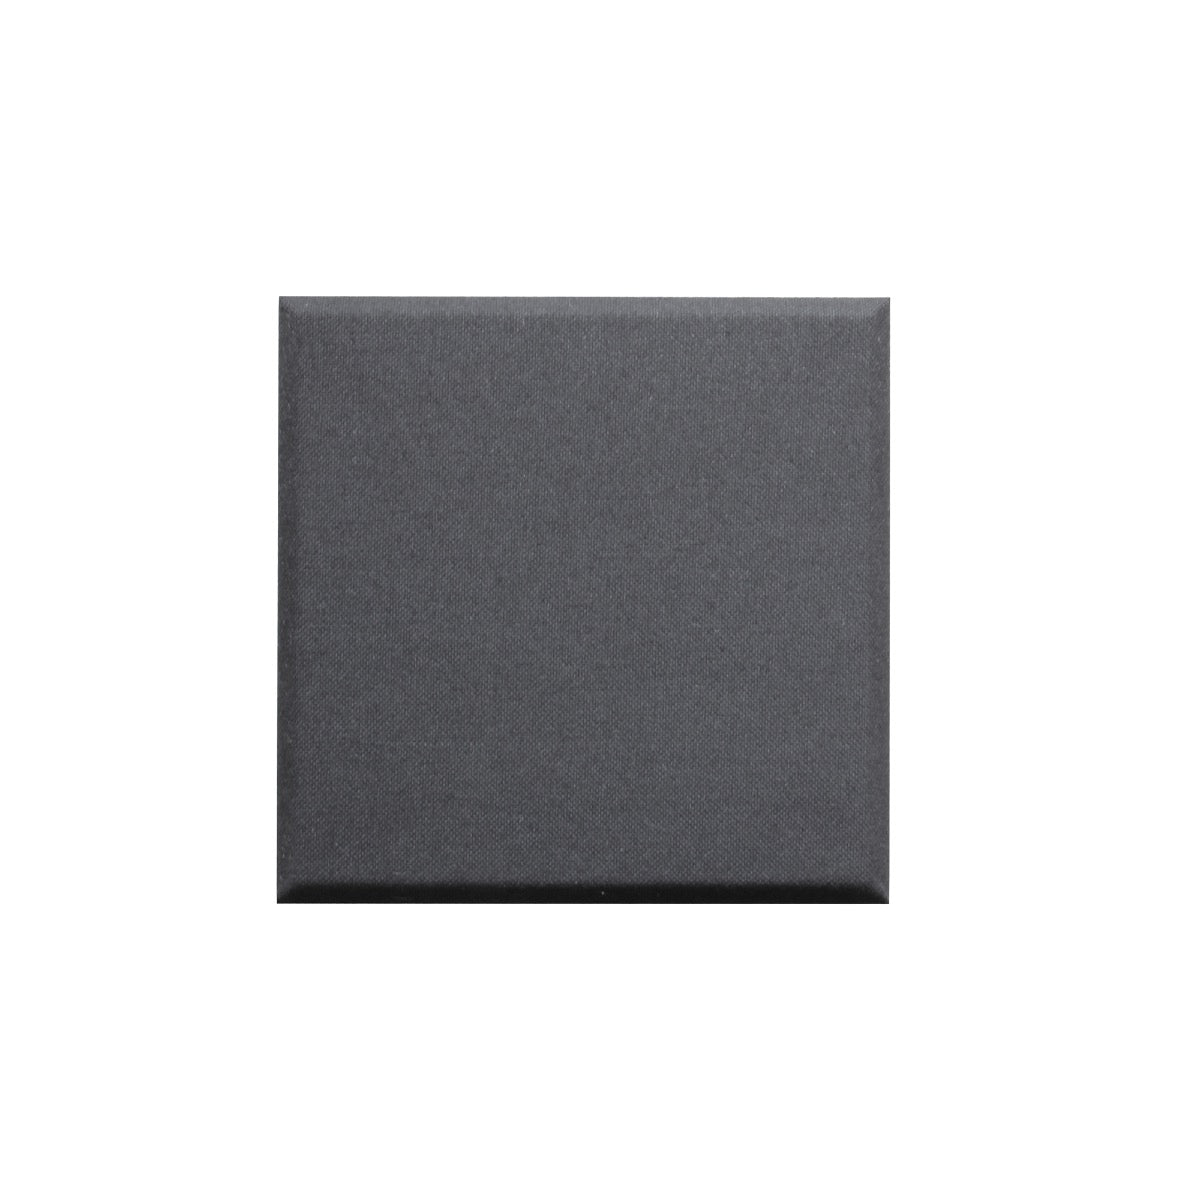 Primacoustic 2" Control Cube Panel - Square Edge - Black - 12 Pack